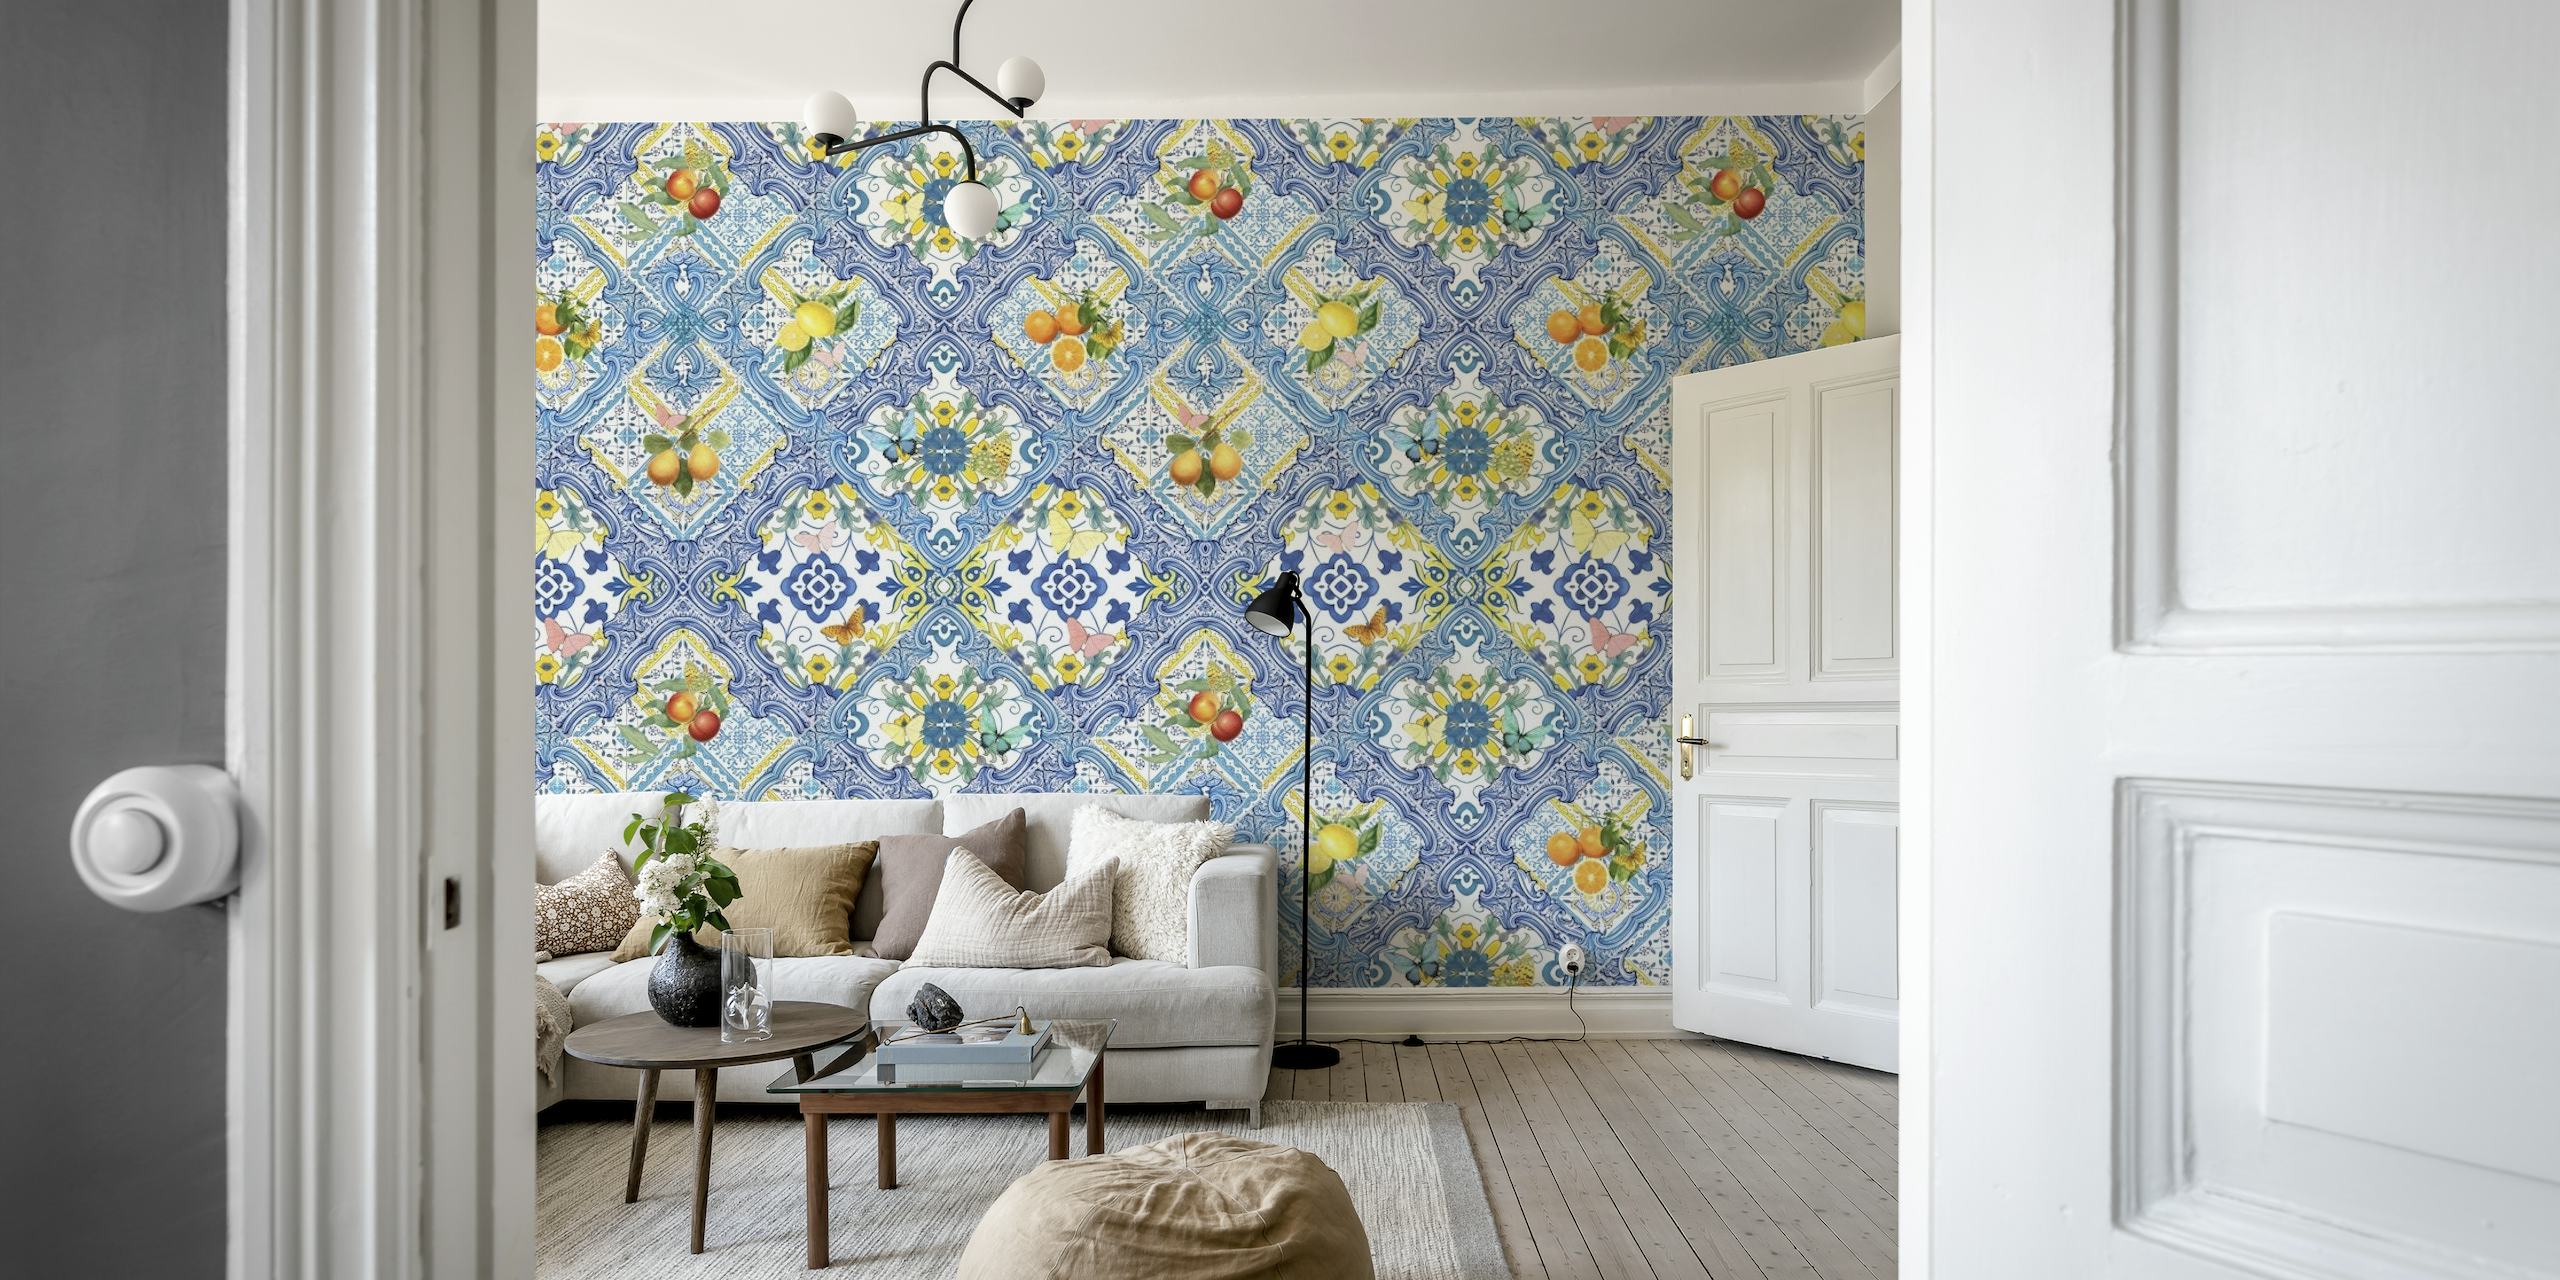 Mediterranean tiles and citrus fruit papel pintado